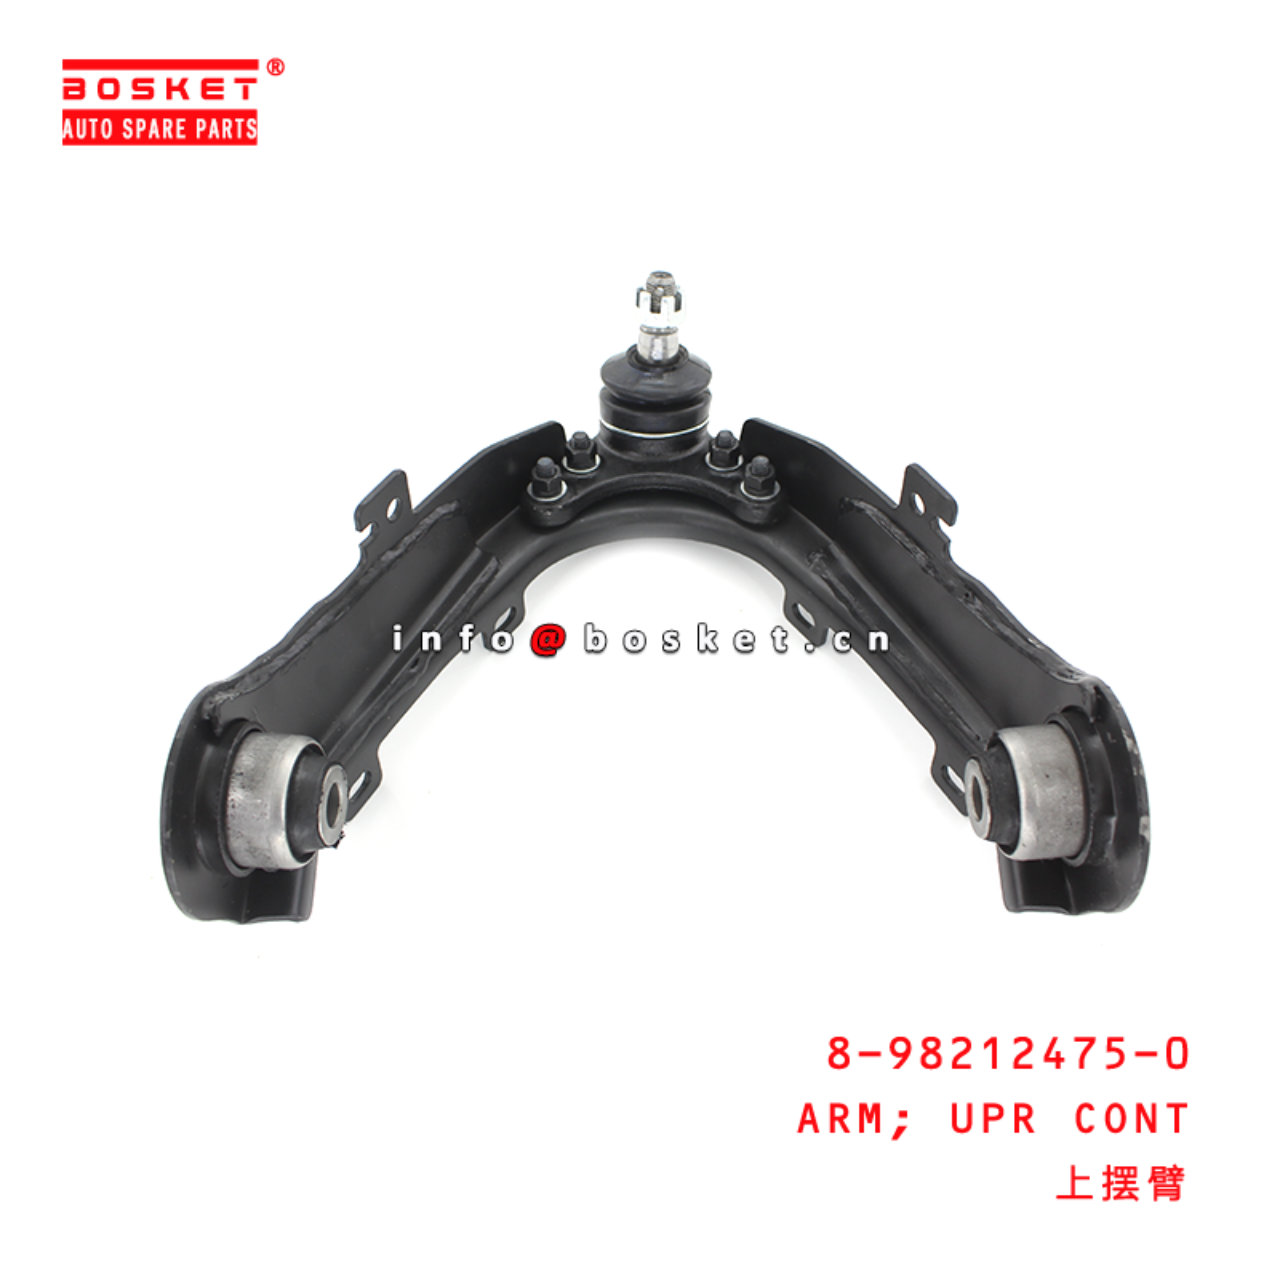 8-98212475-0 Upper Control Arm Suitable for ISUZU DMAX 8982124750